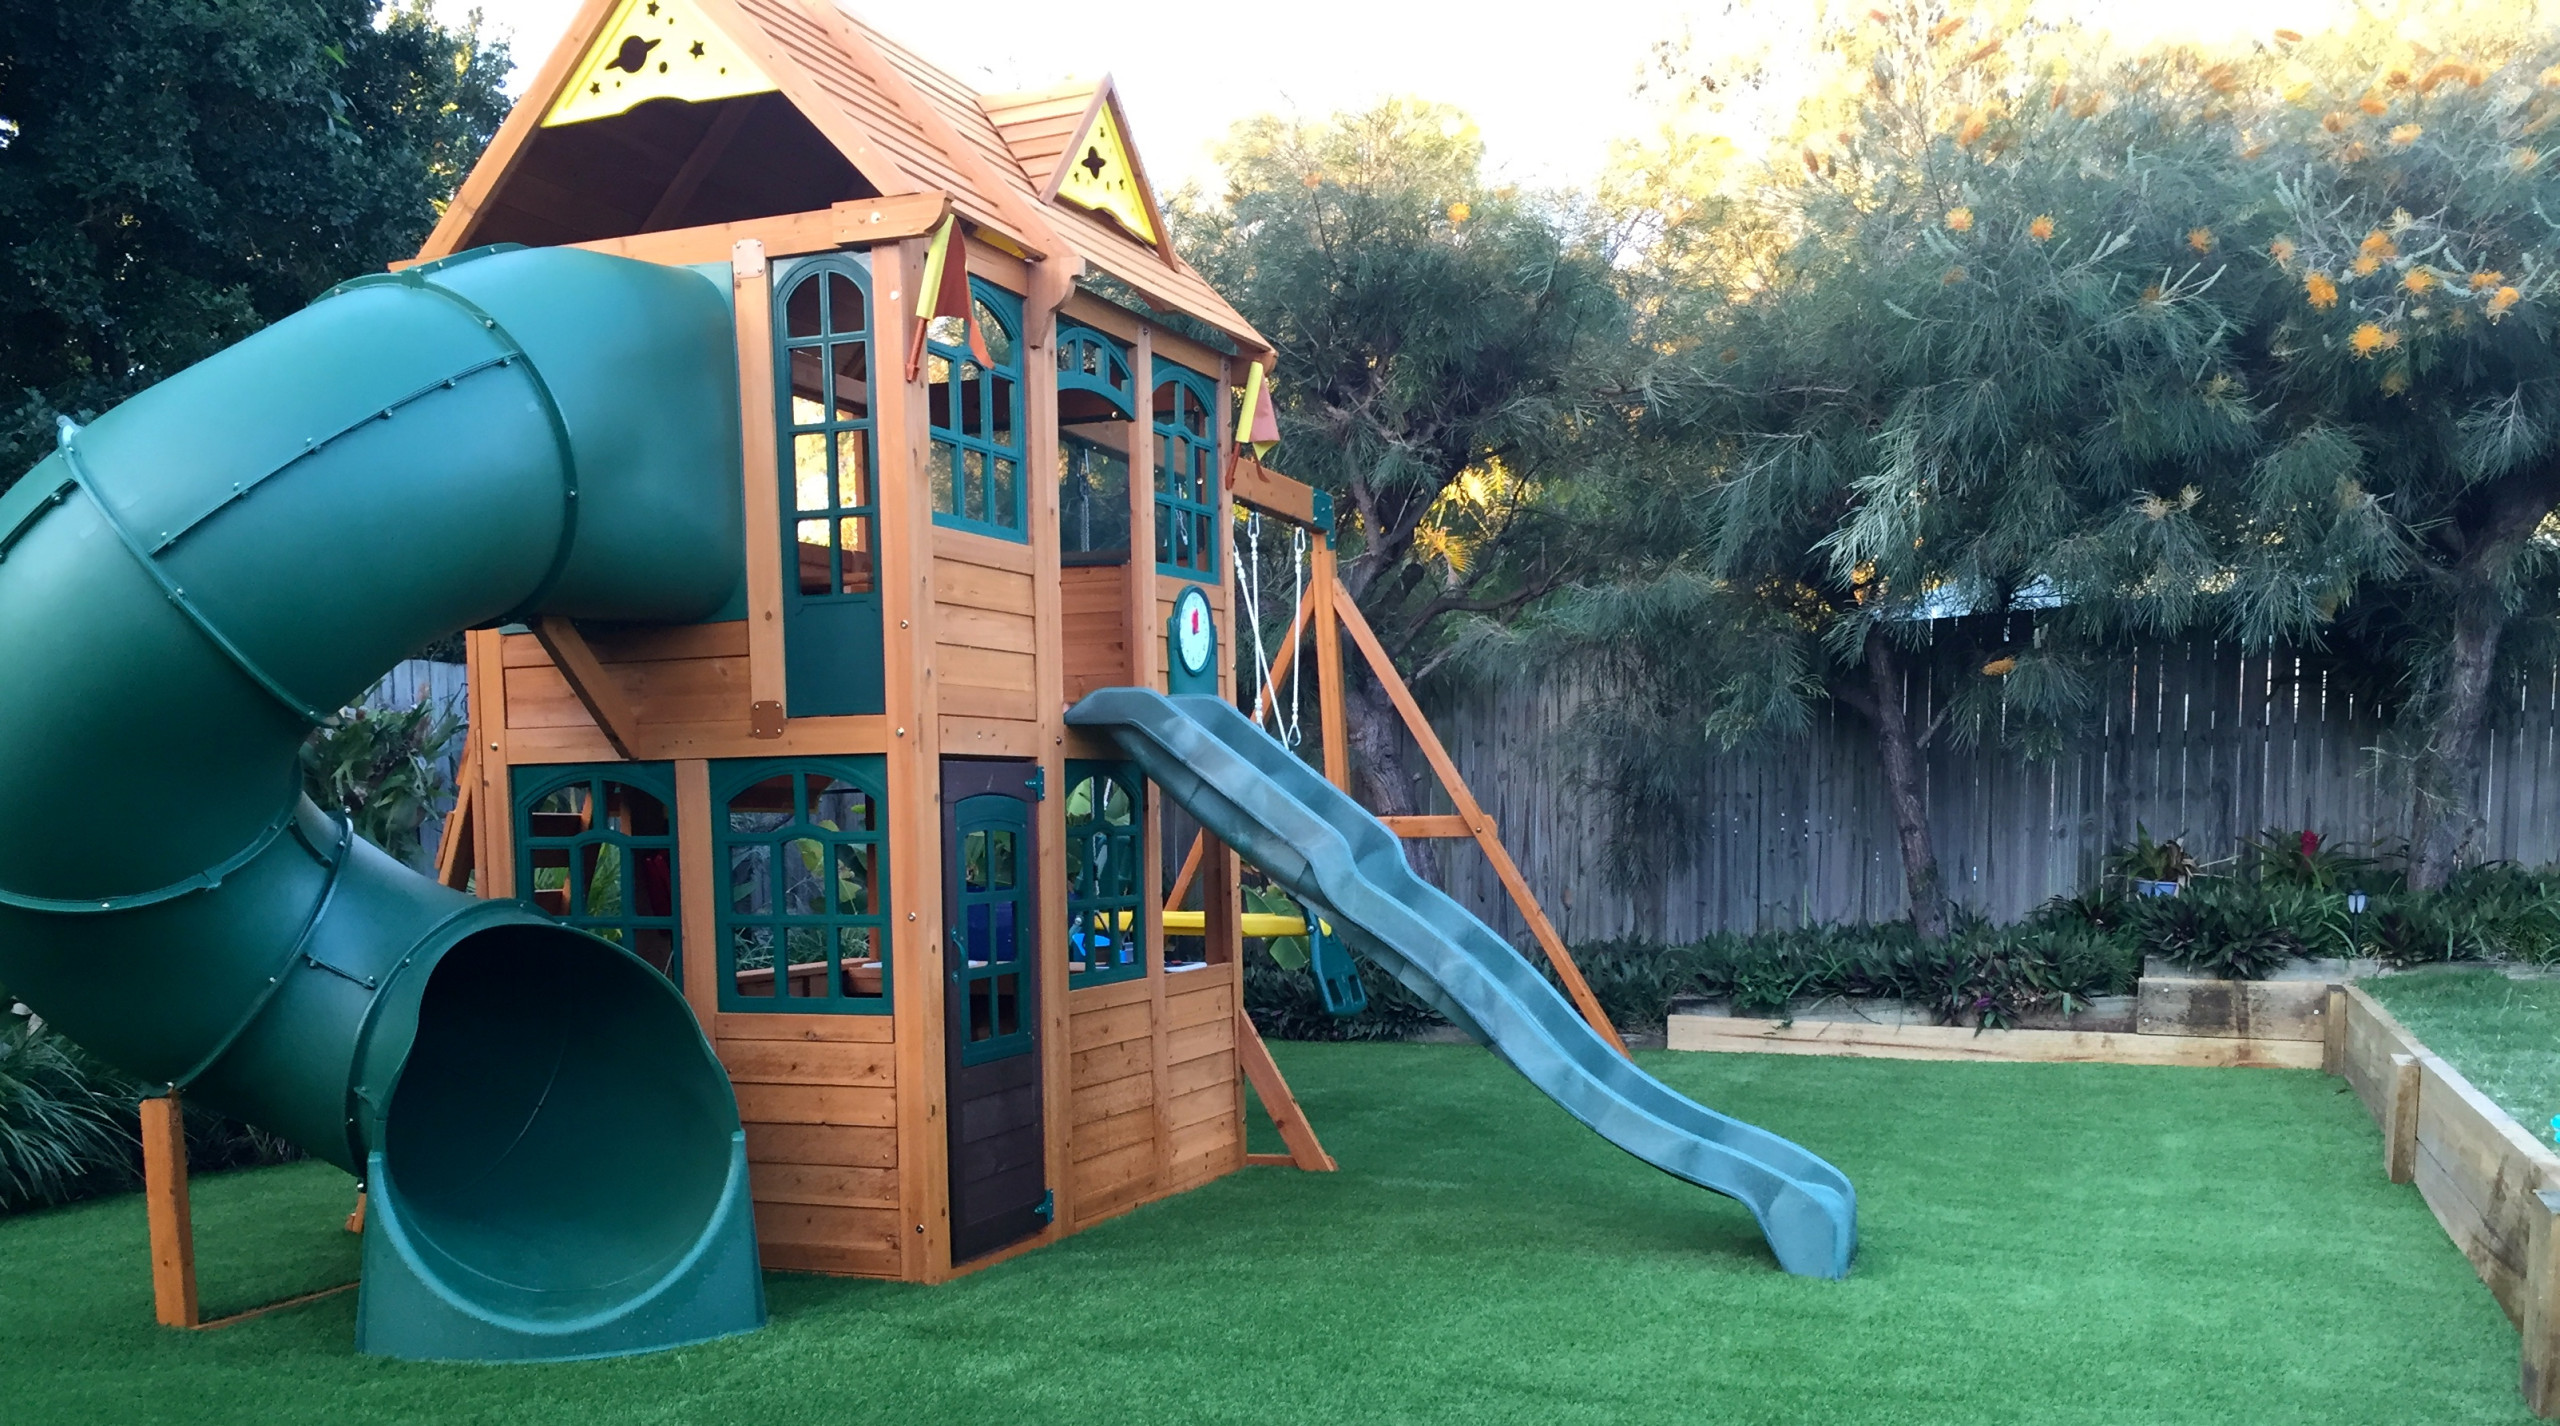 Backyard Playground Turf - Photos & Ideas | Houzz